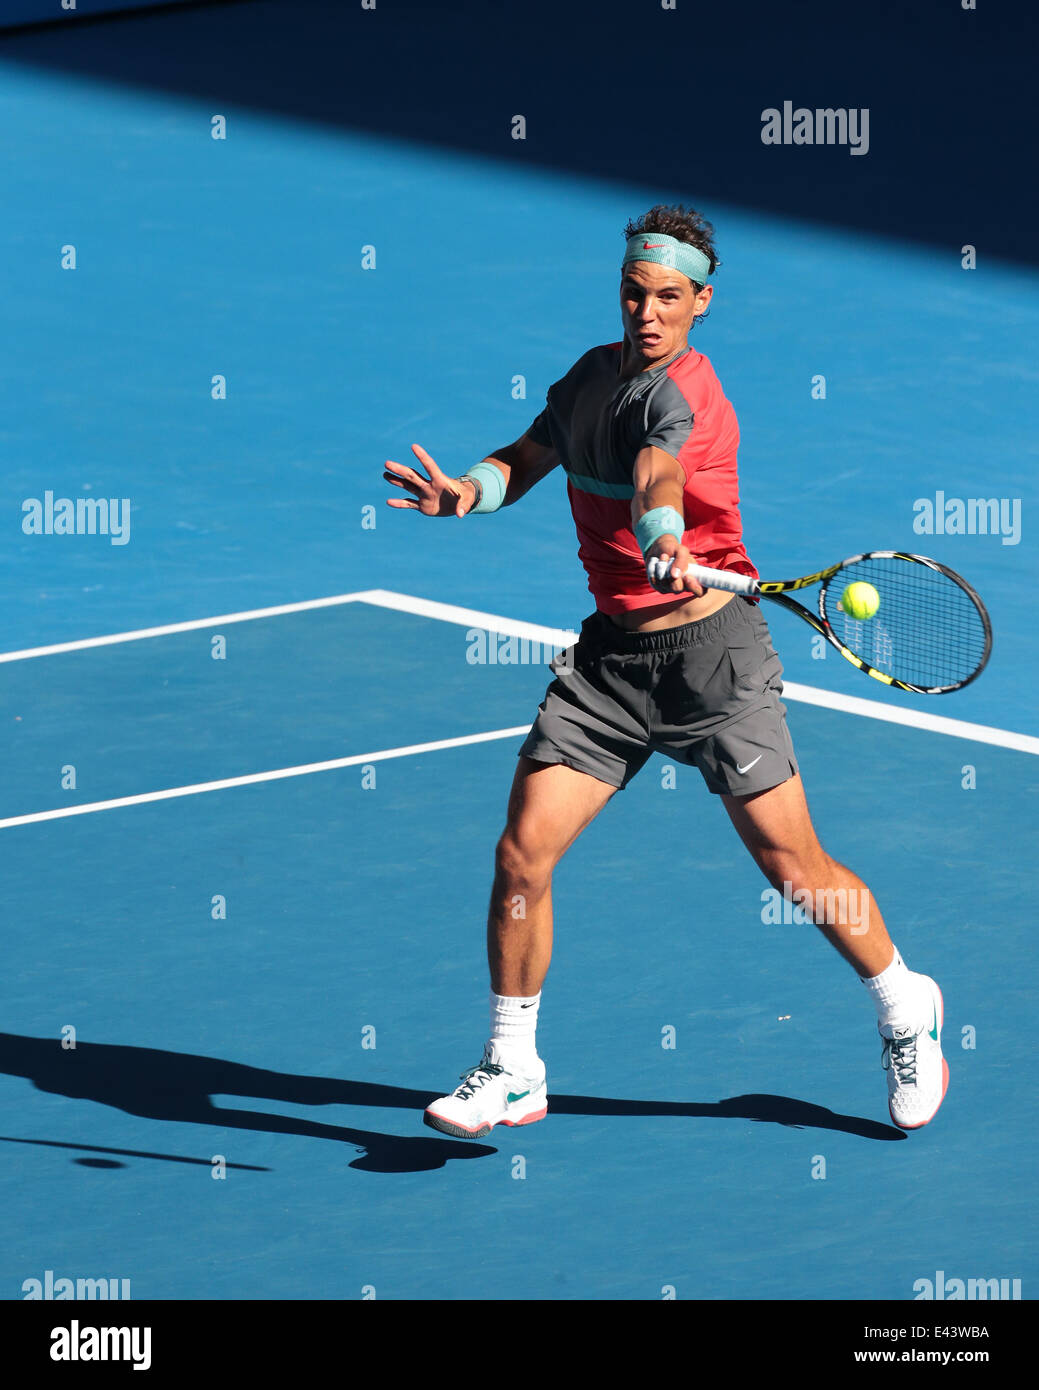 Tennis - Australian Open 2014 Melbourne - Rafael Nadal vs. Grigor Dimitrov  - Rod Laver Arena Featuring: Rafael Nadal Where: Melbourne, Australia When:  22 Jan 2014 Stock Photo - Alamy